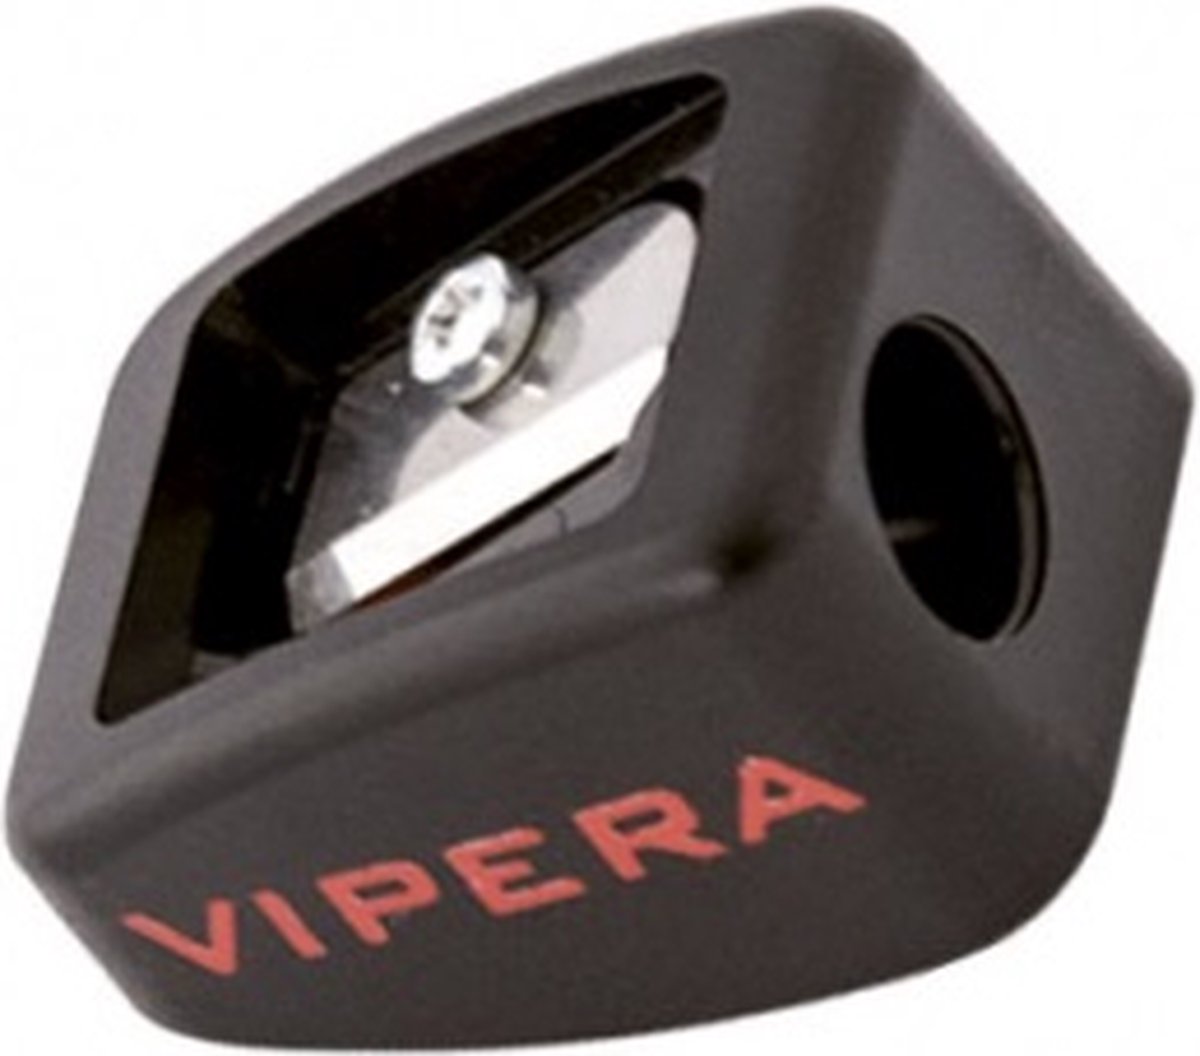 Vipera - Sharpener Sharp sharpener For Contours